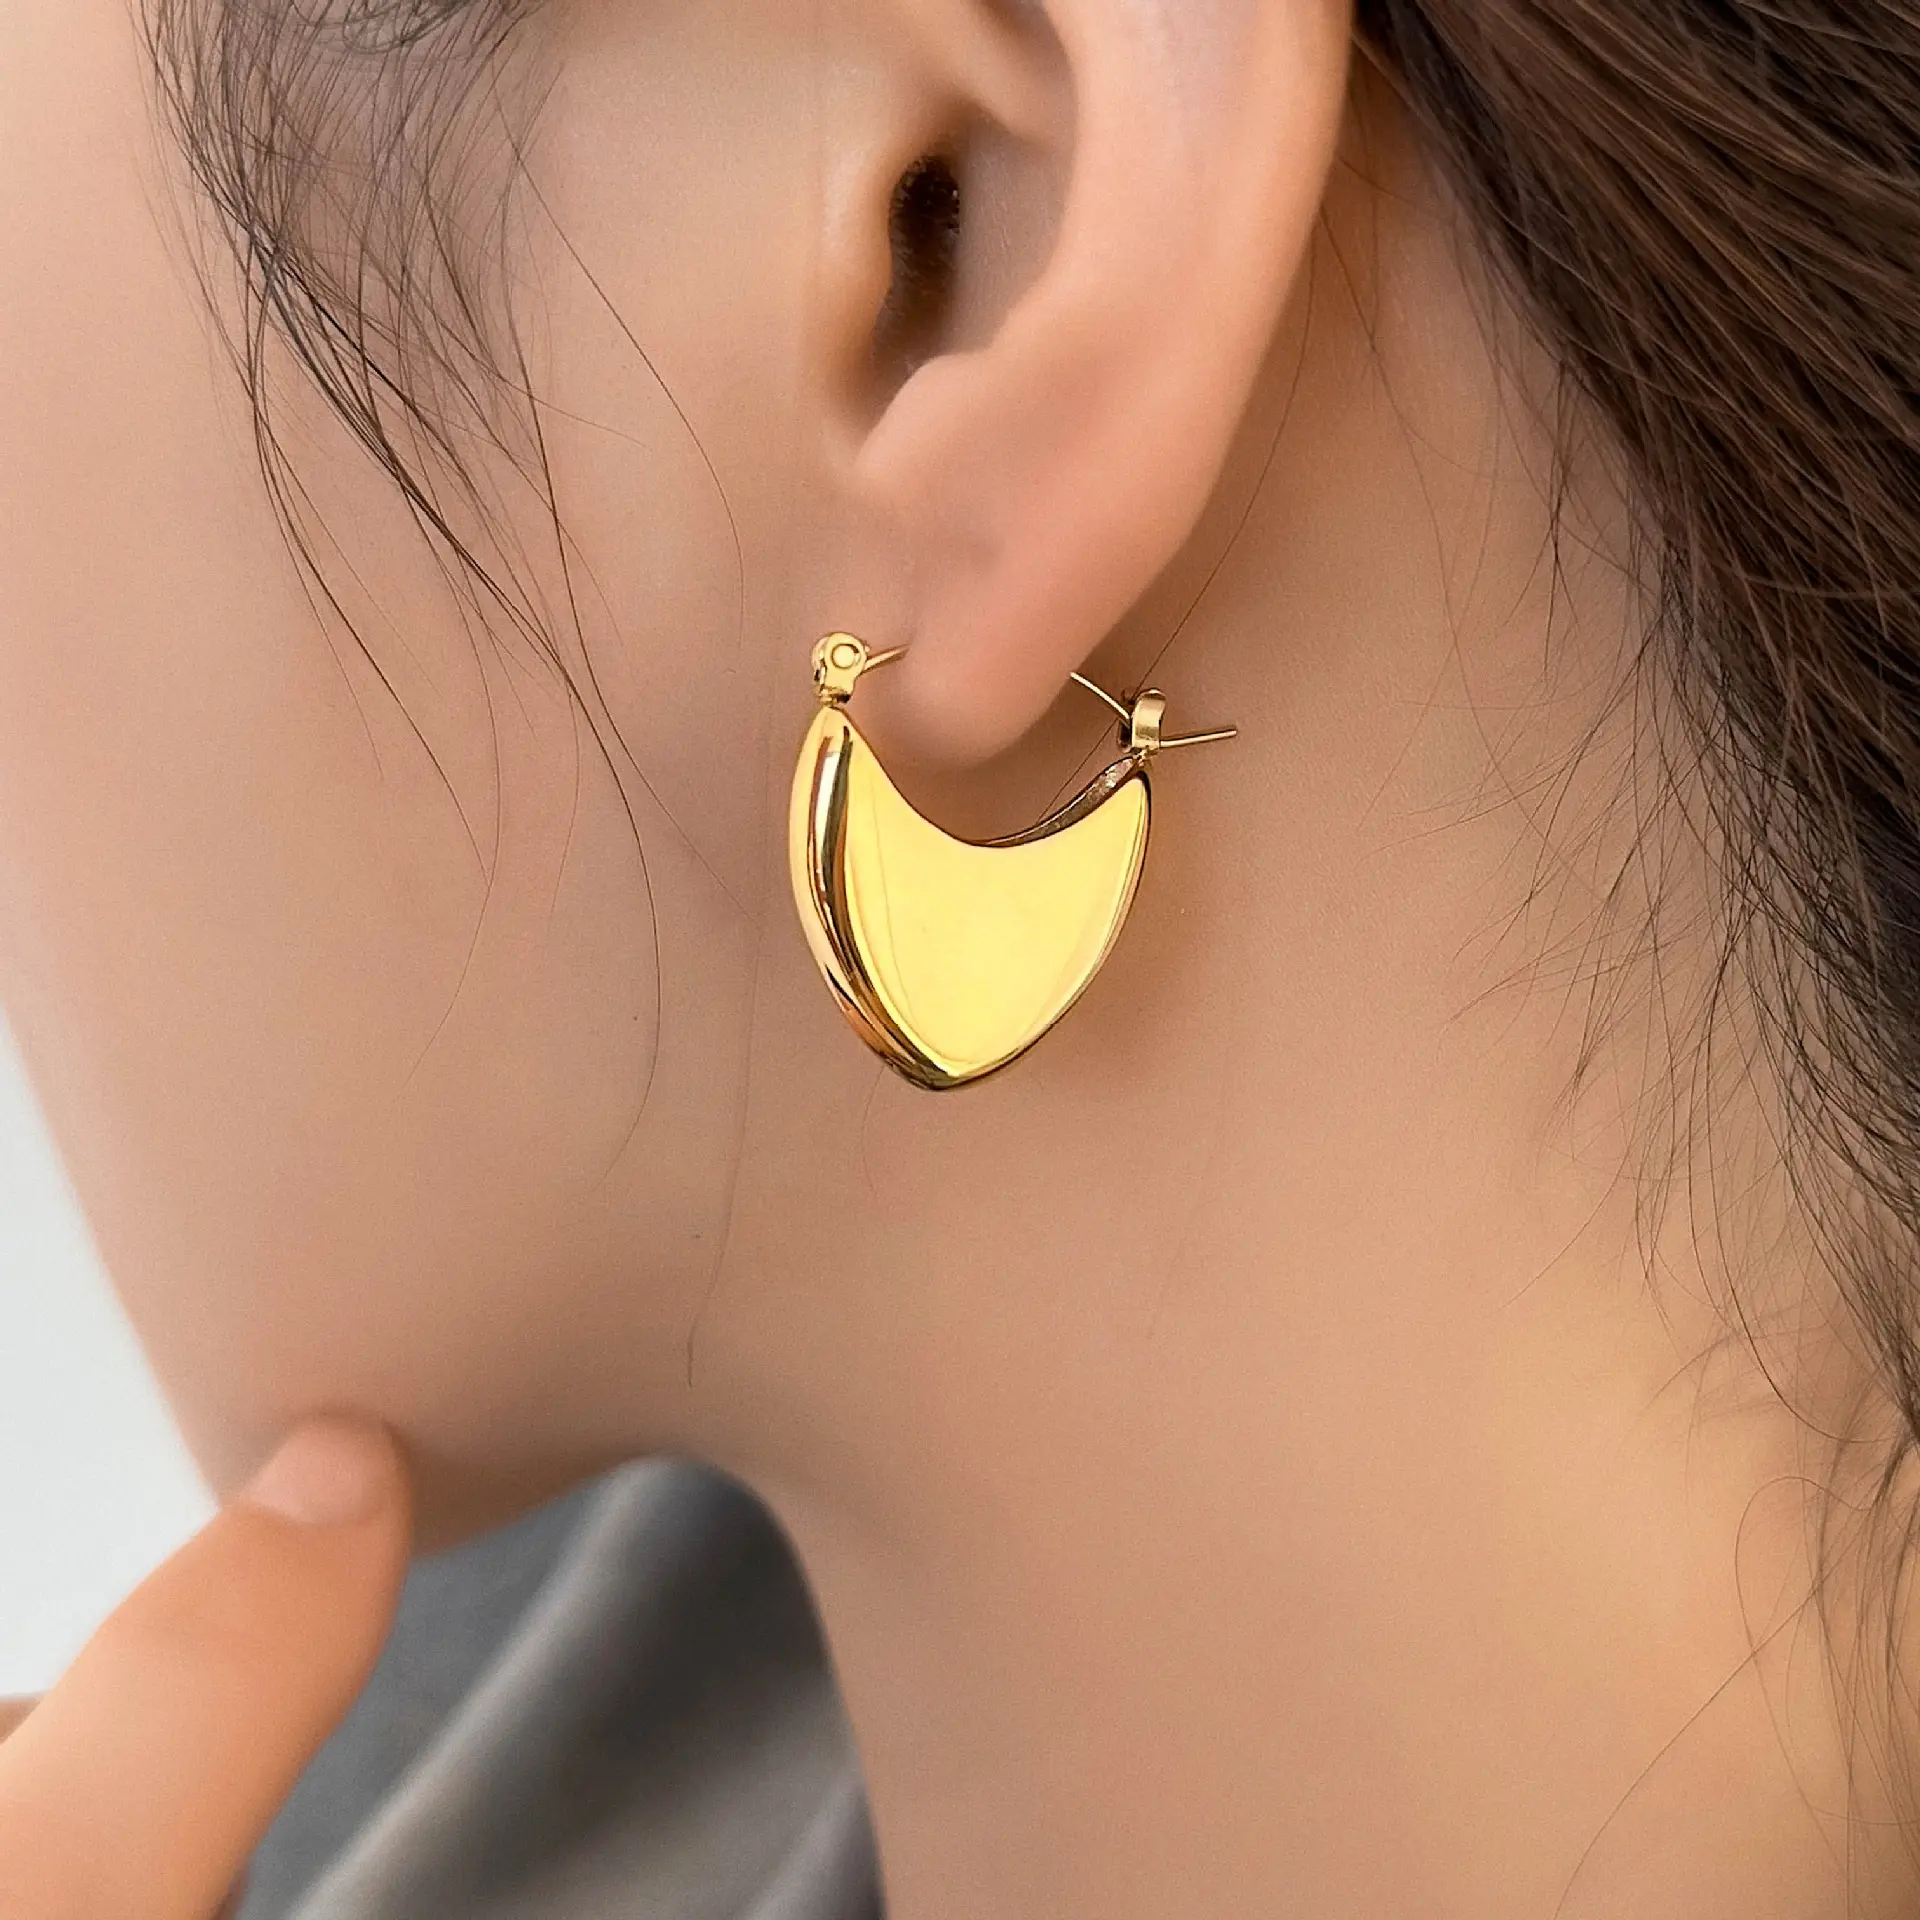 Waterproof Gold Hoop Earrings Stainless Steel French Style Hoop Earrings Trendy Hoops 18K Gold Delicate Love Ear Button Earrings